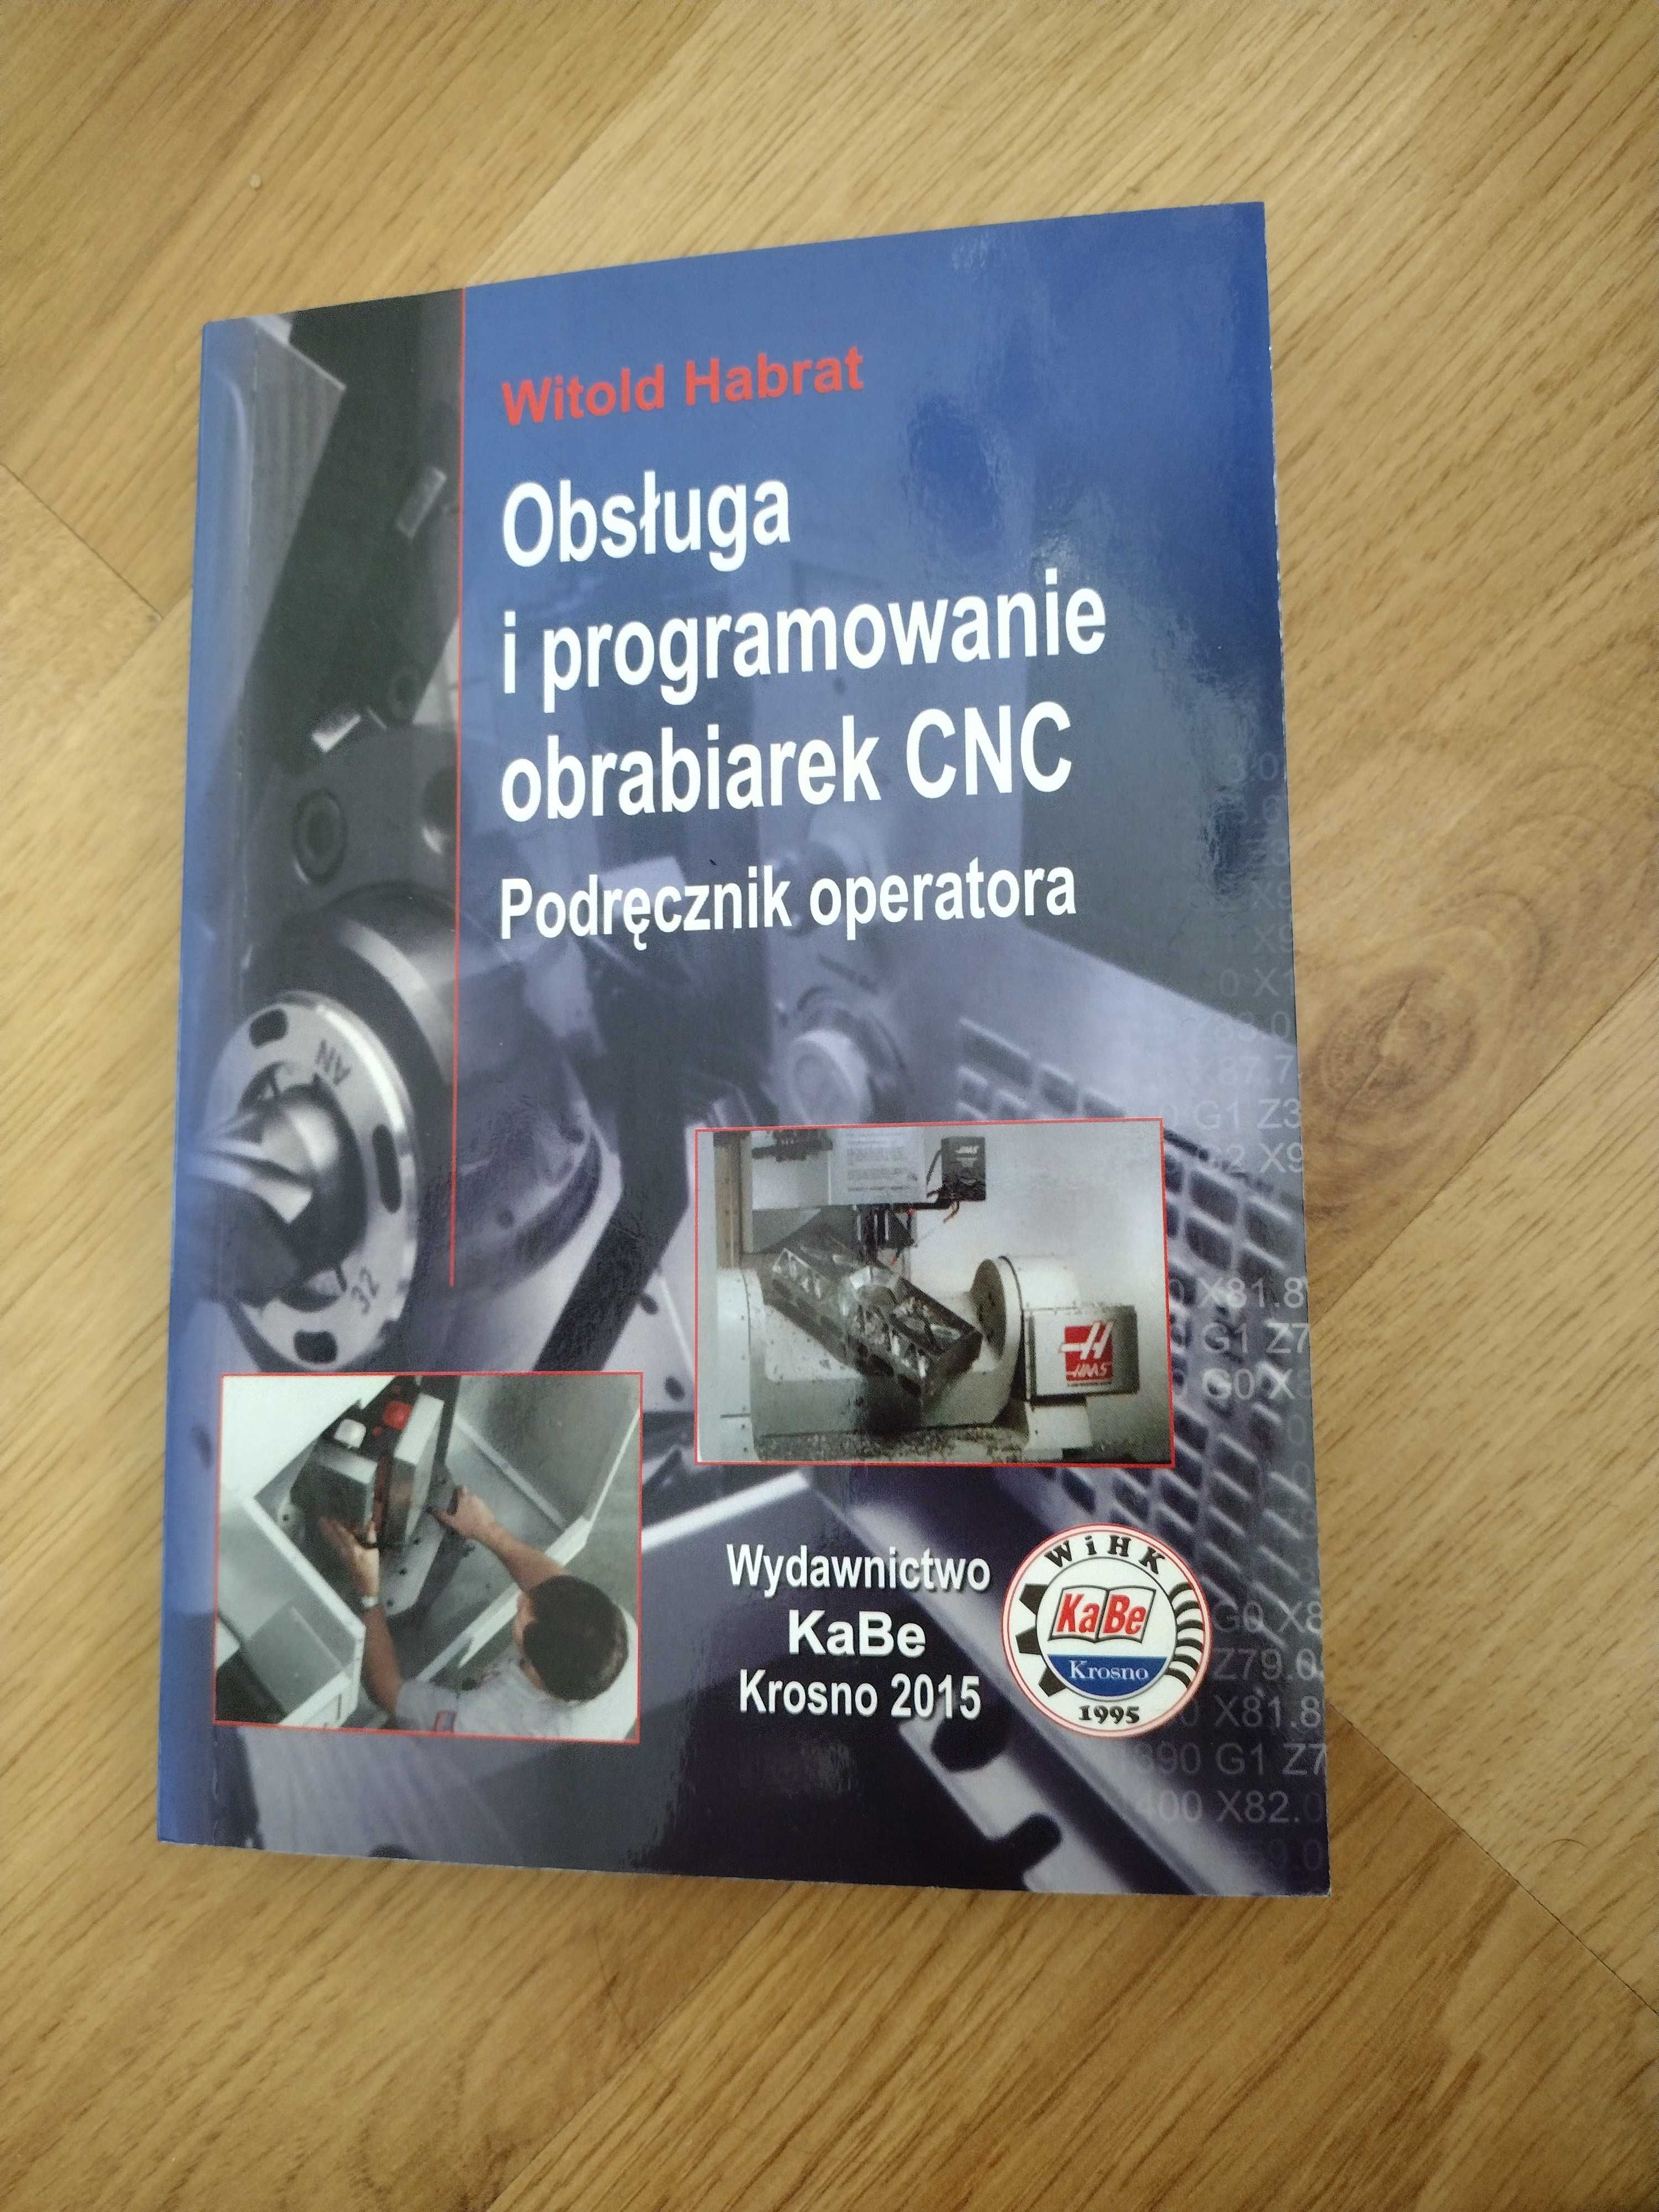 Obsługa i programowanie obrabiarek CNC Witold Habrat